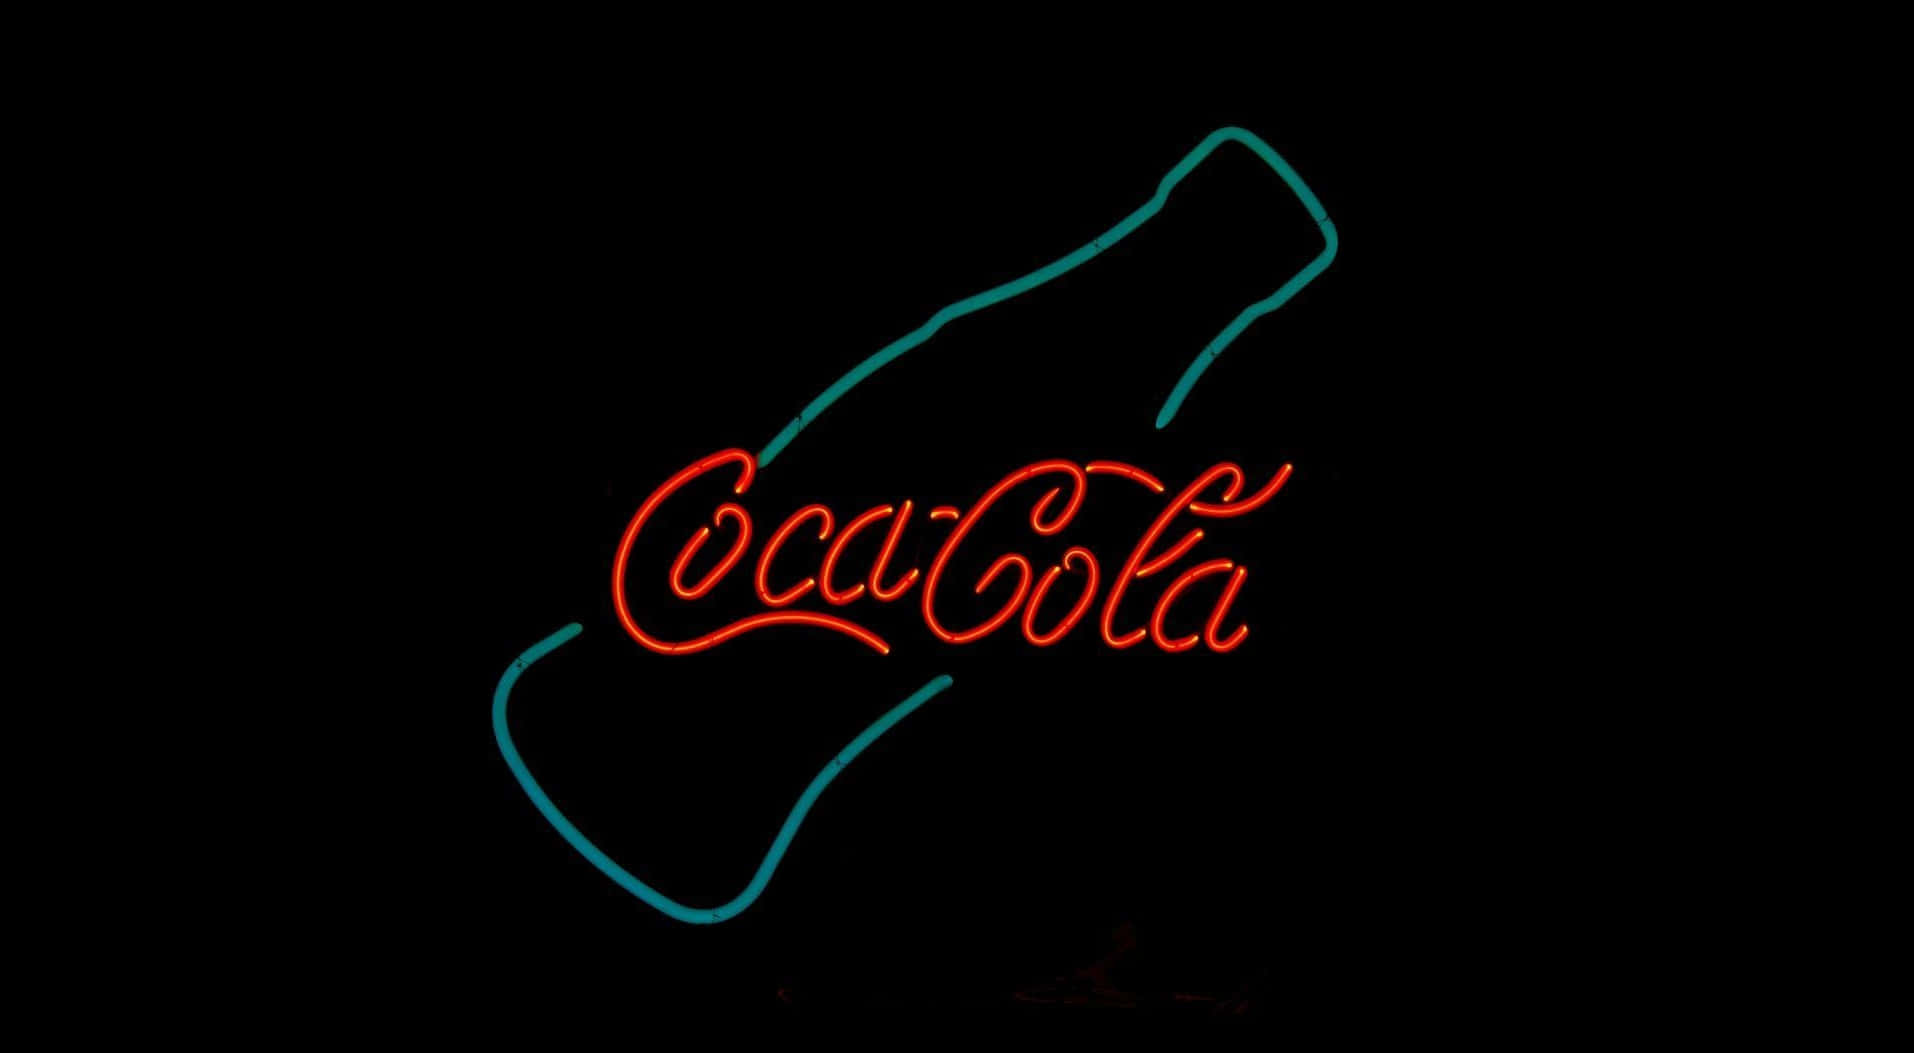 Breathtaking Image of Coca-Cola Bottle